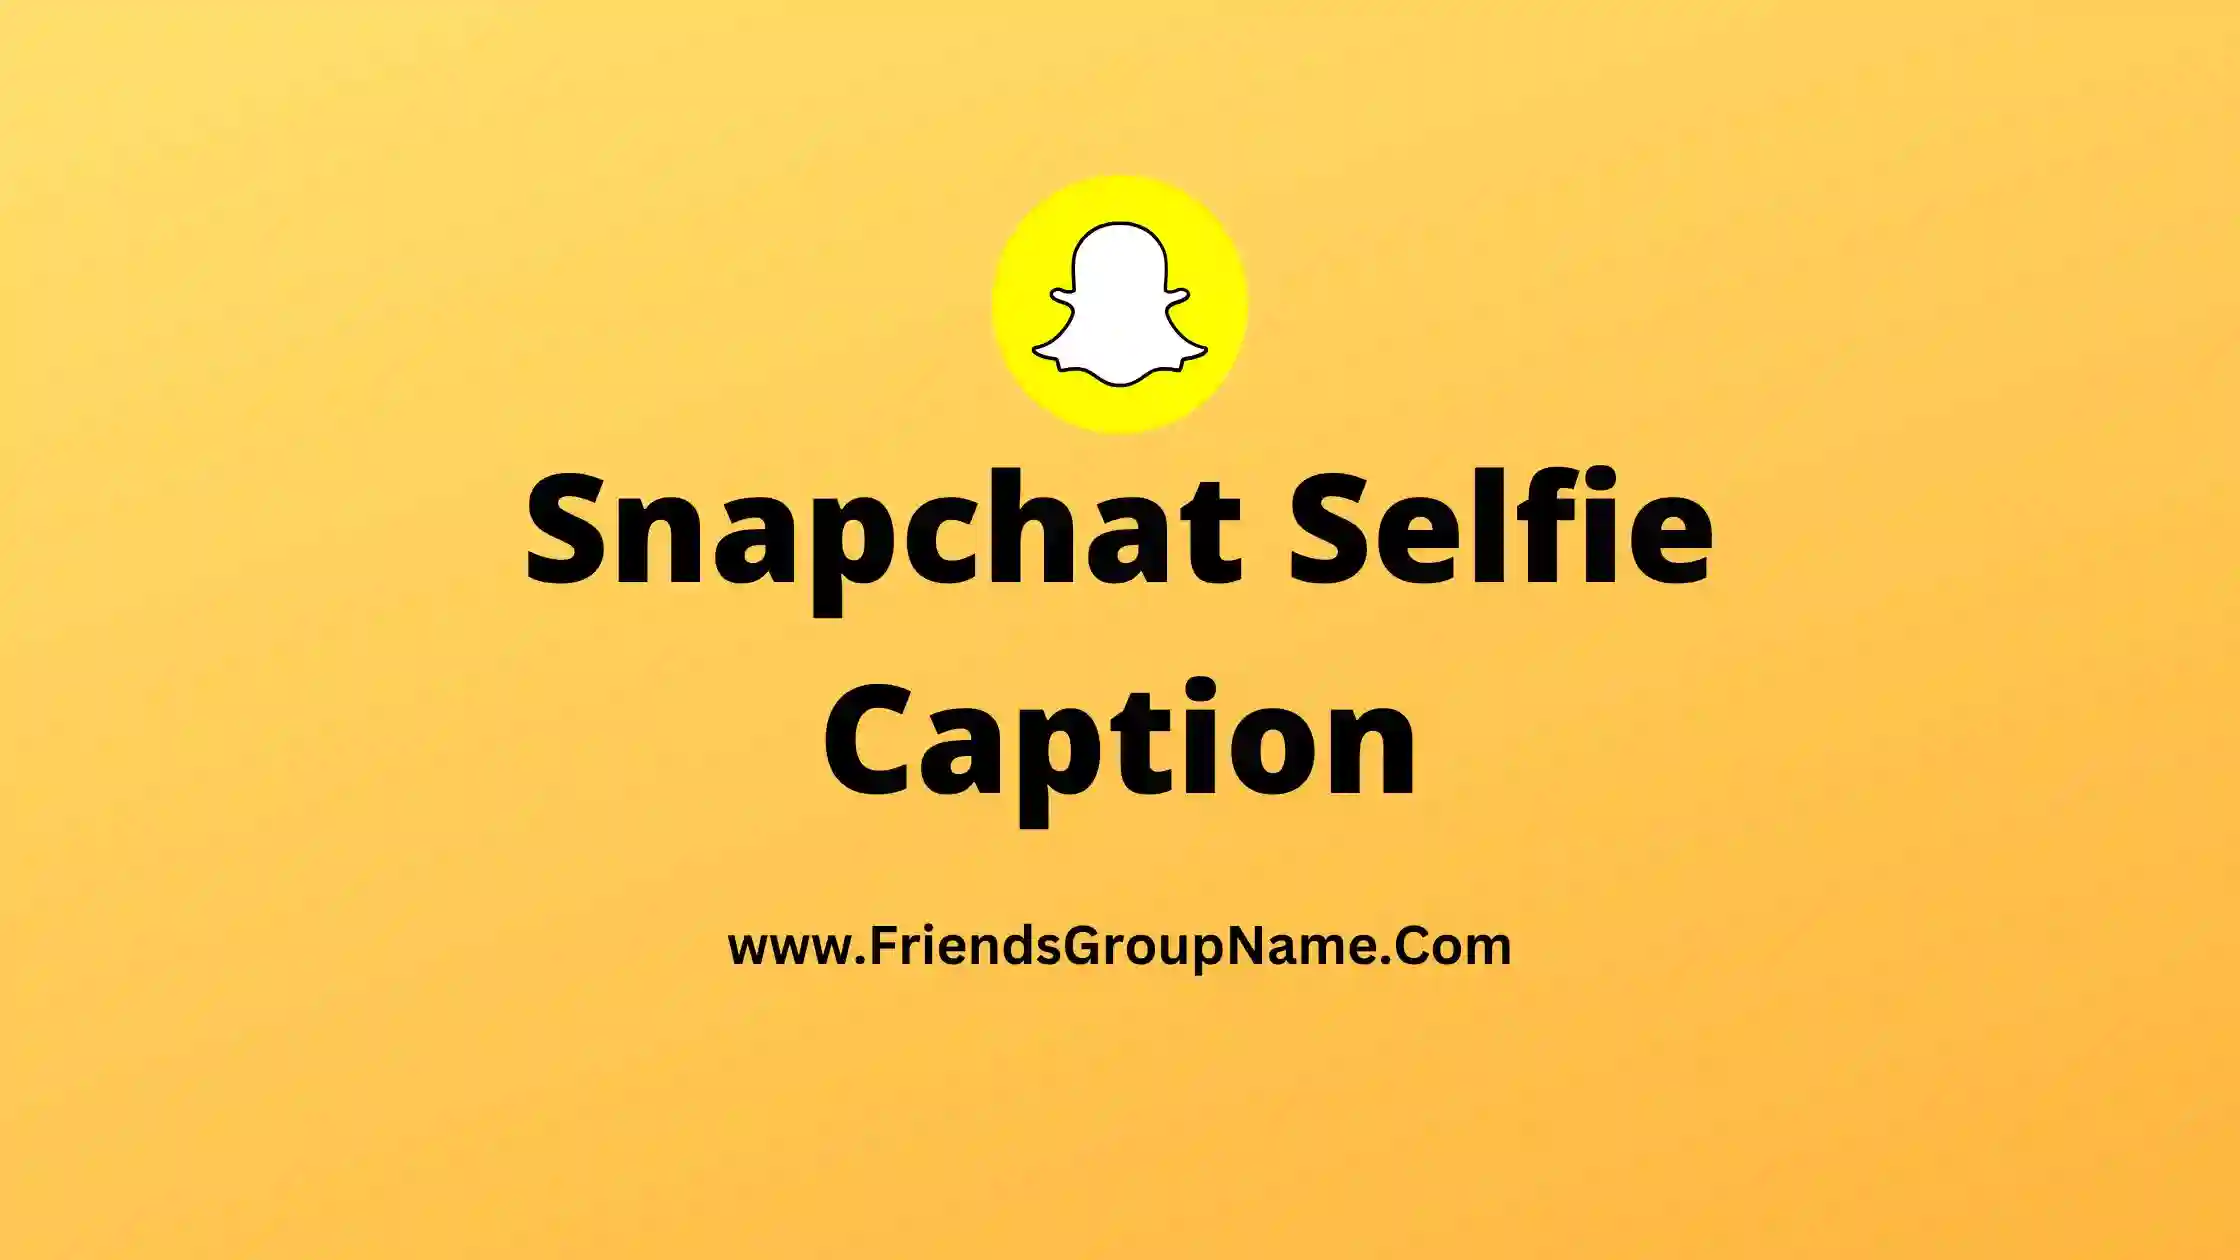 Snapchat Selfie Caption